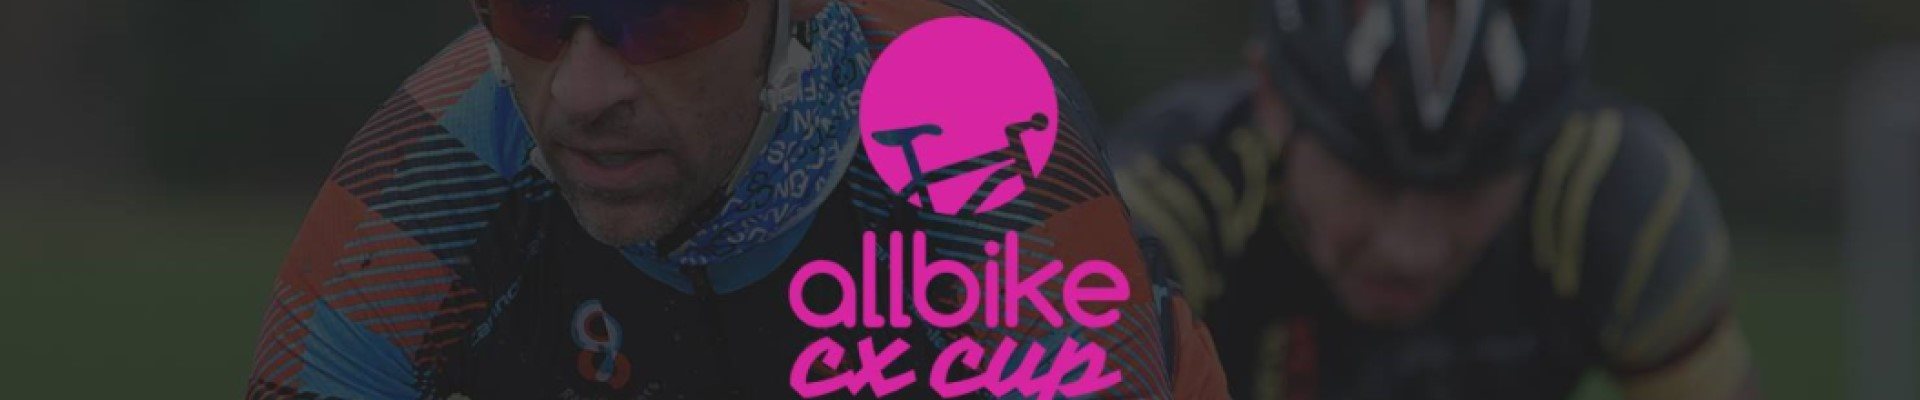 Allbike CX cup #5 Viborg